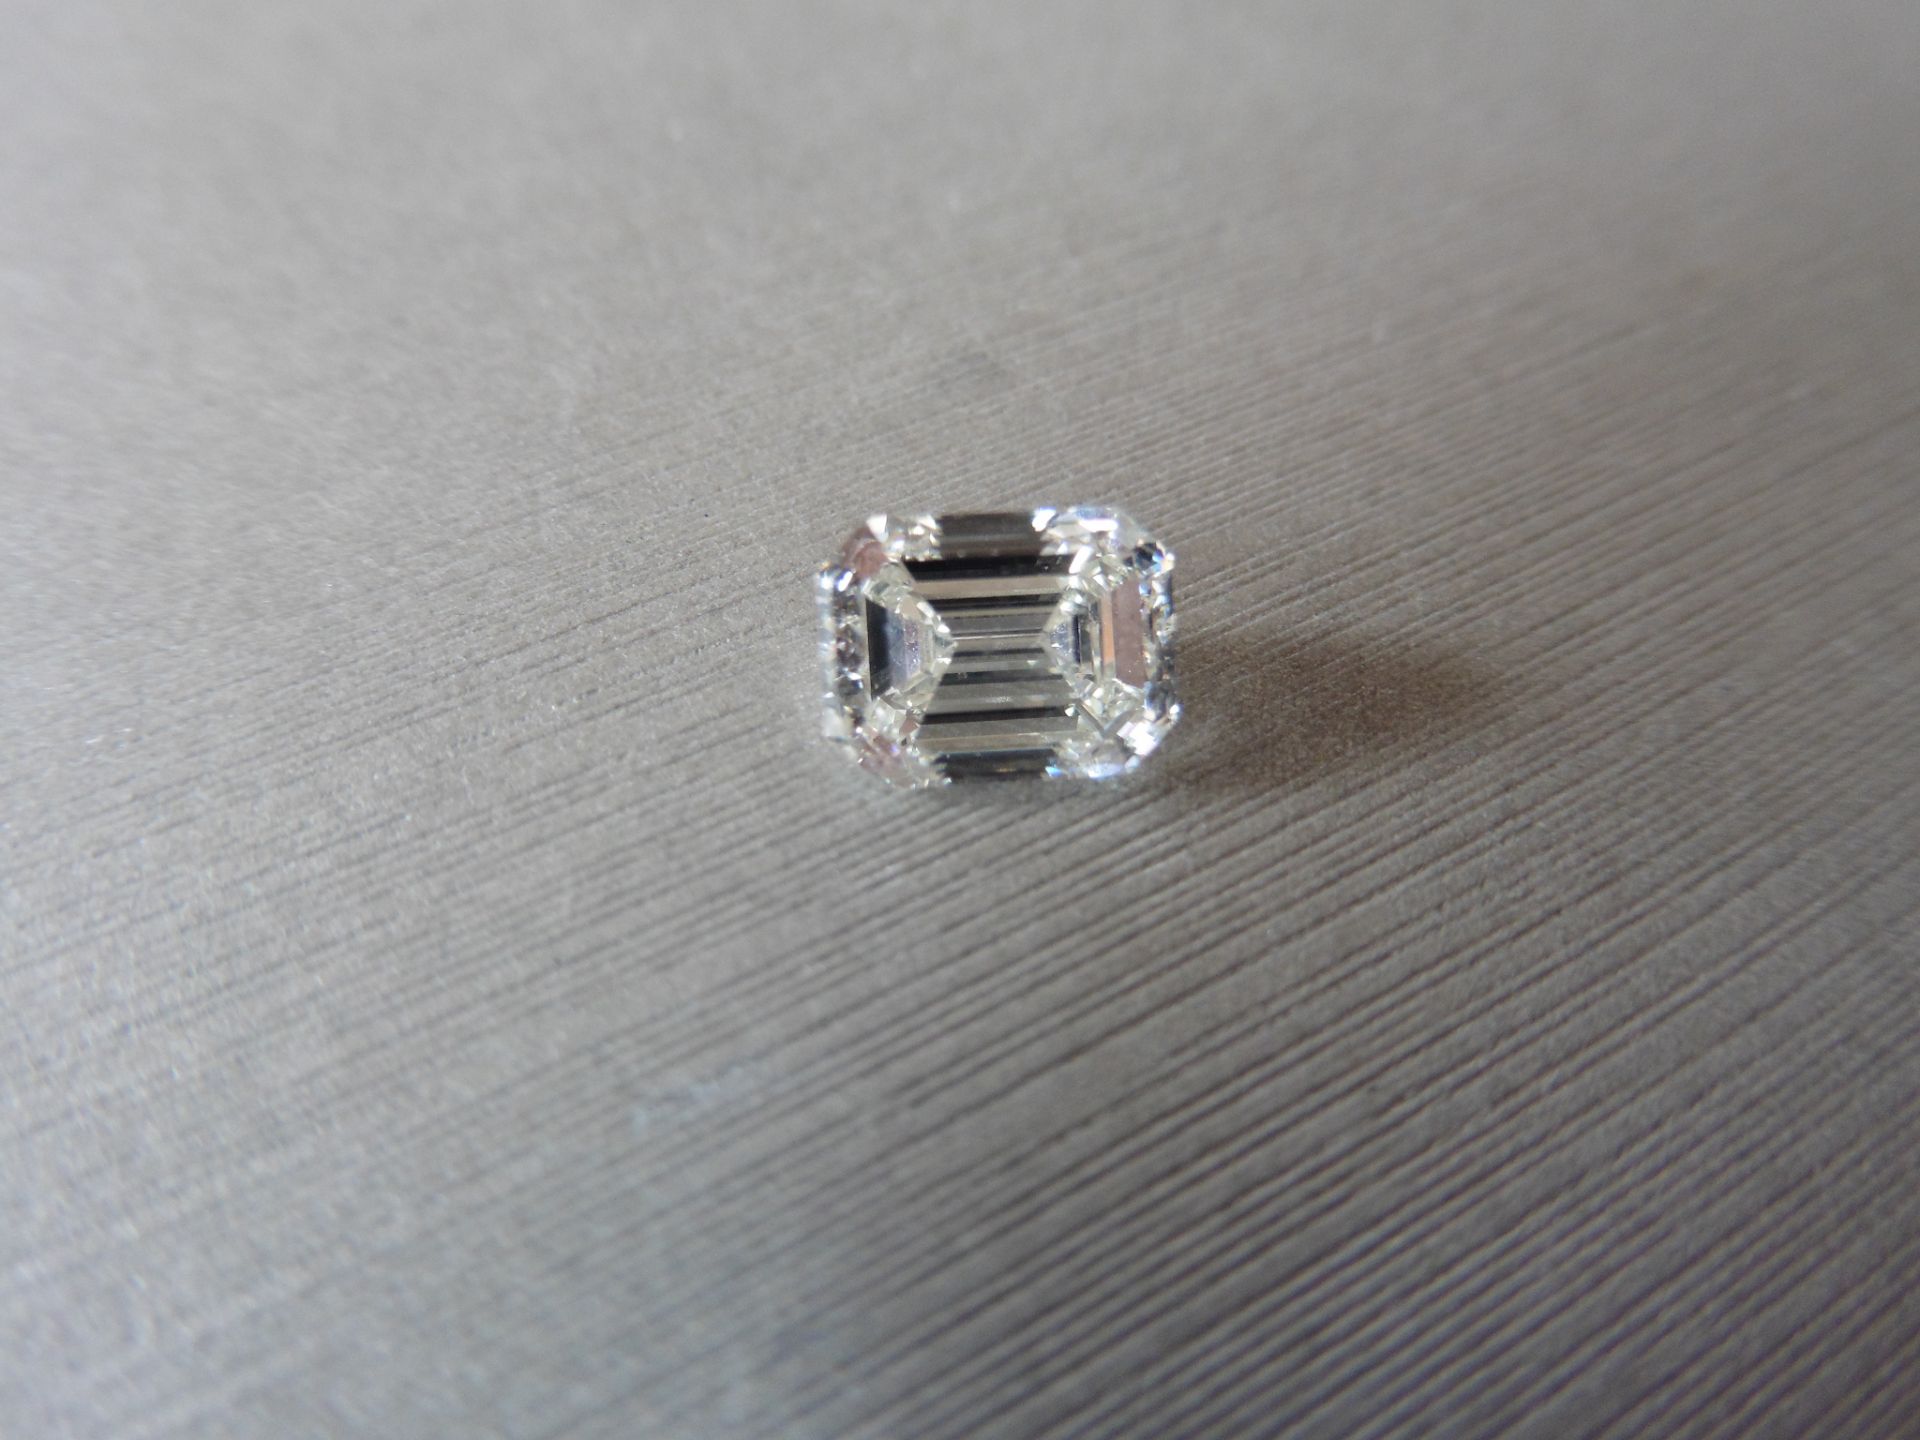 2.01ct single emerald cut diamond, measures 8.06 x 6.08 x 4.23mm J colour, SI3 clarity. No